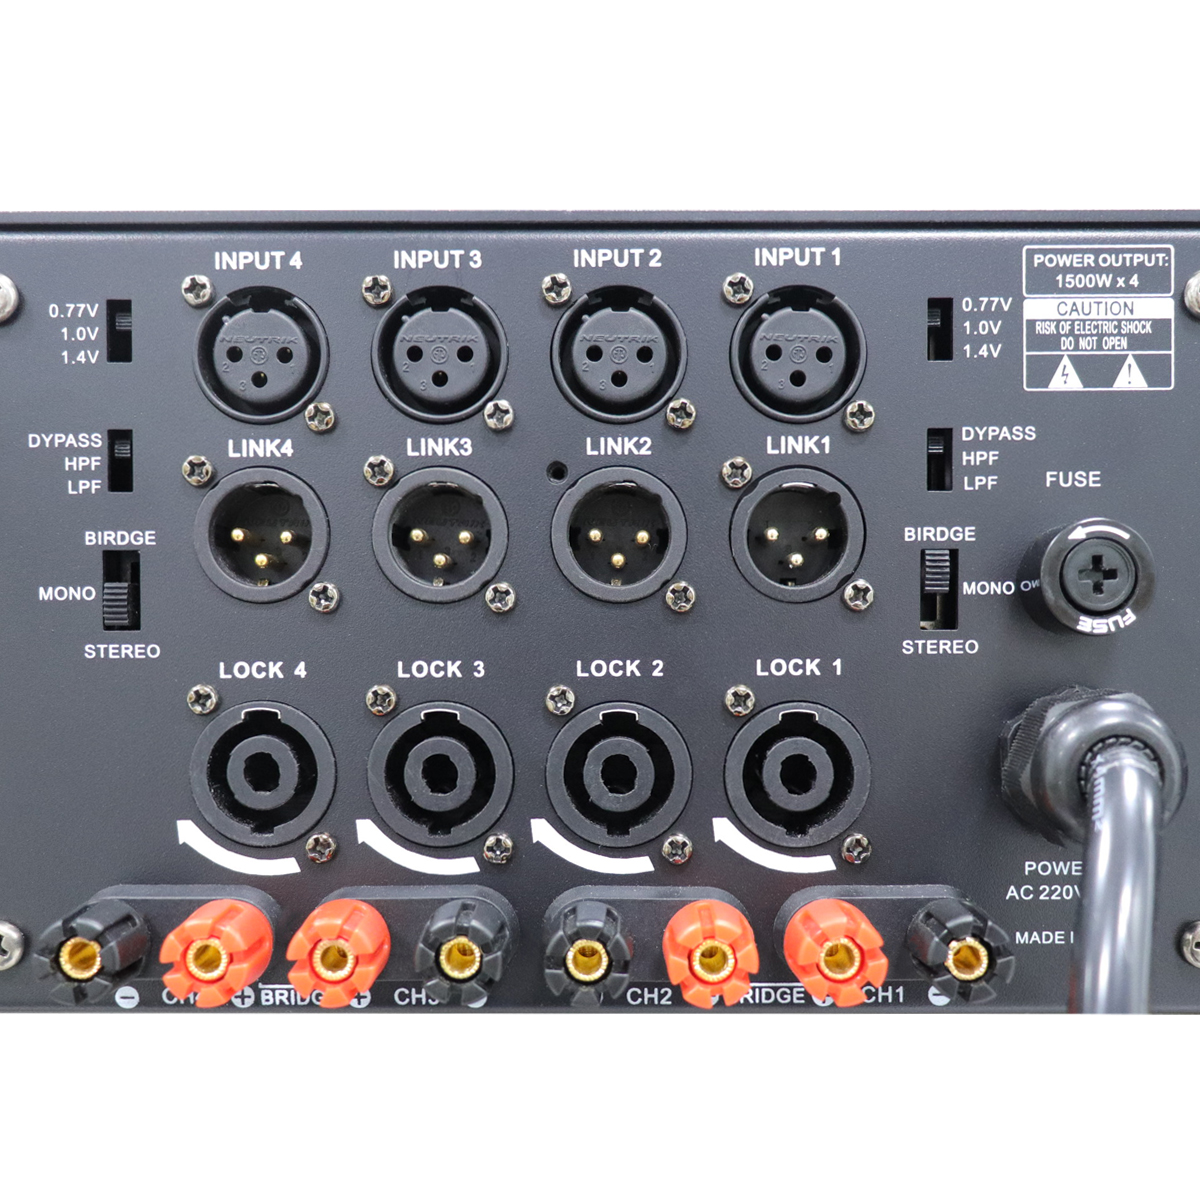 Newly developed H-class 1500W 4-channel 3U professional amplifier, SY-41500